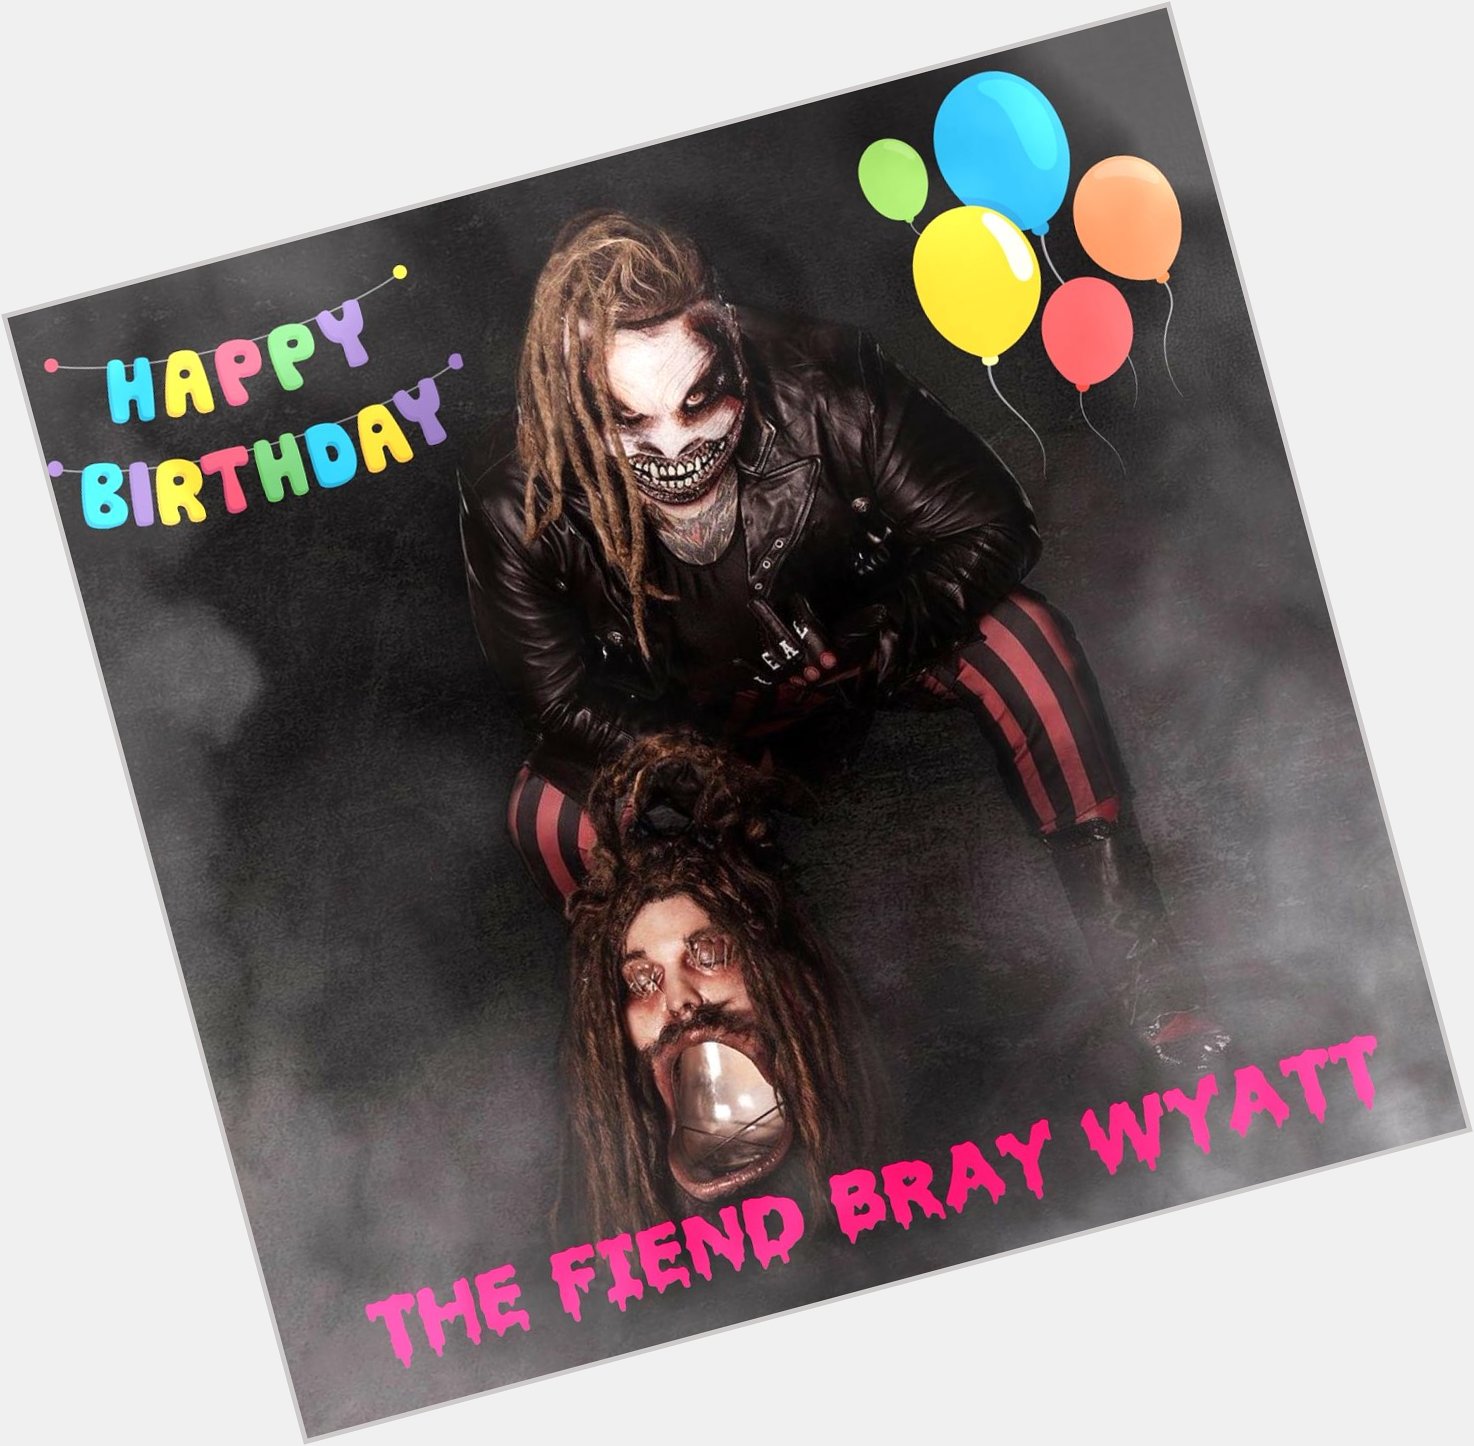 Happy birthday to the fiend bray Wyatt      